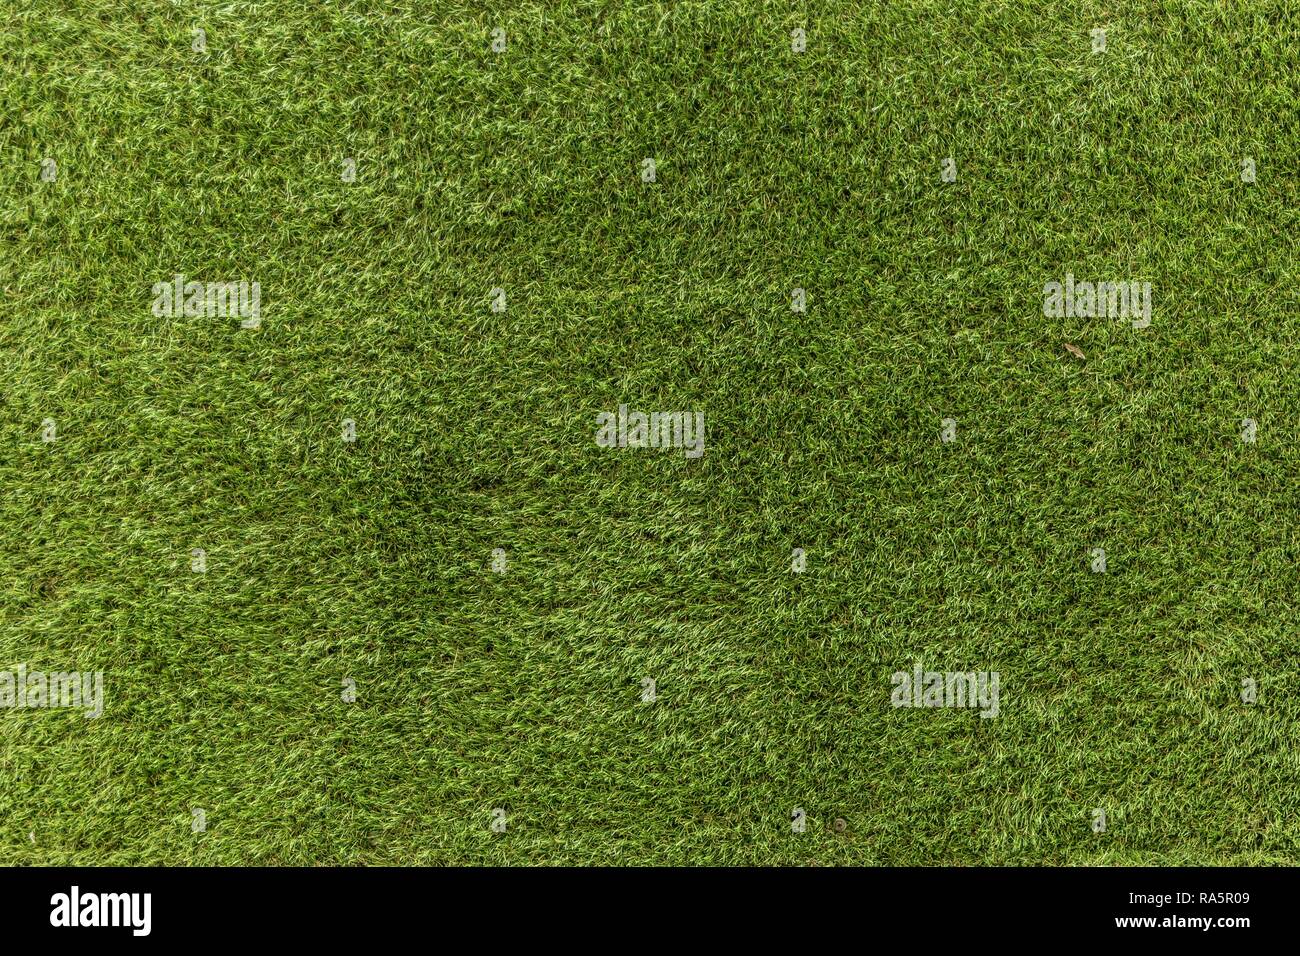 Stück grünen Kunstrasen, Ile Rousse, Korsika, Frankreich Stockfotografie -  Alamy